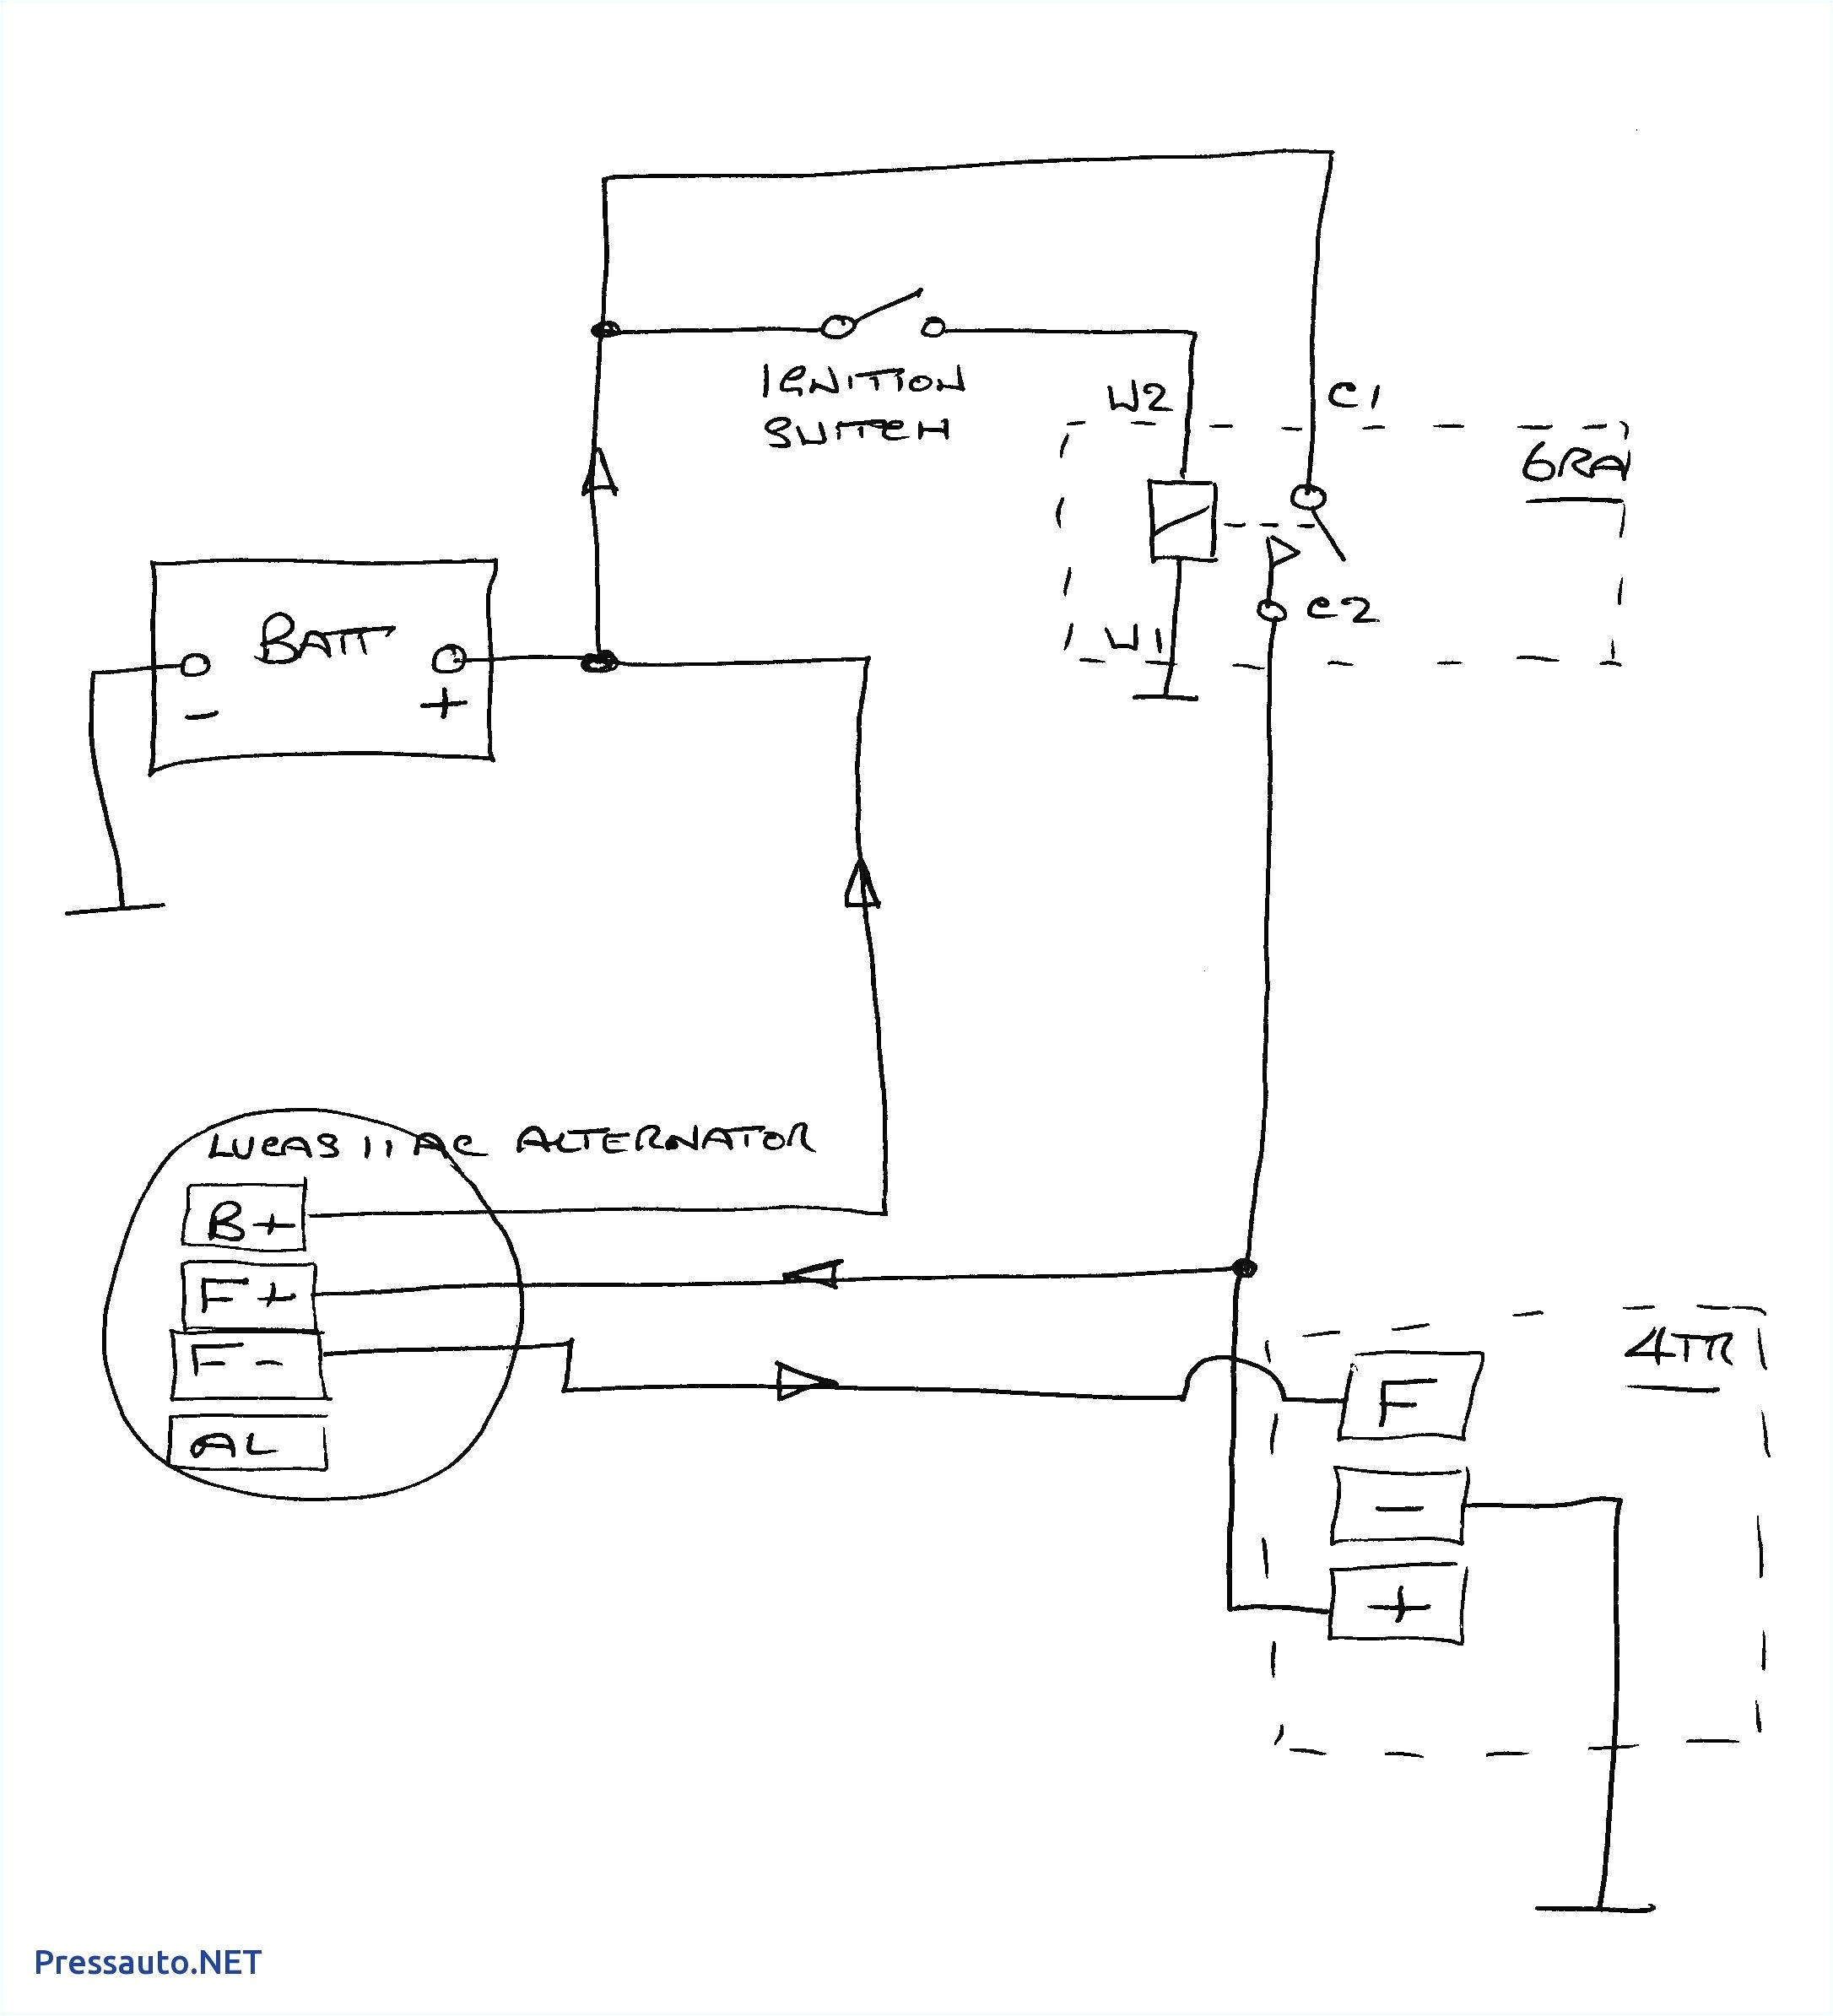 denso alternator wiring diagram pigl wiring diagram centrewiring diagram also denso alternator wiring diagram on denso